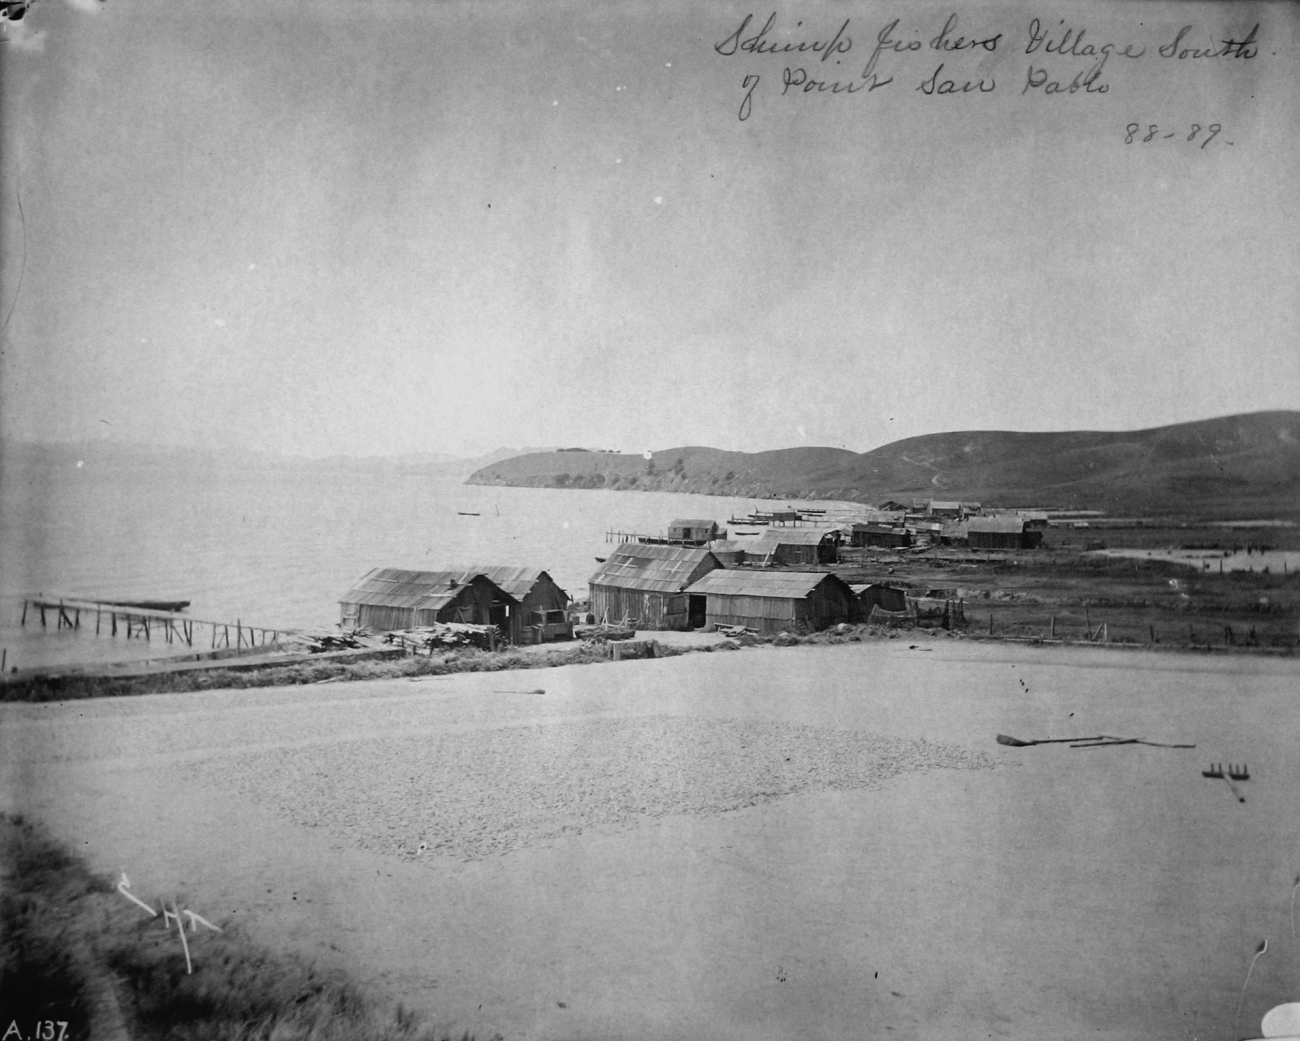 Shrimp fishers village south of Point San Pablo, 1888-89